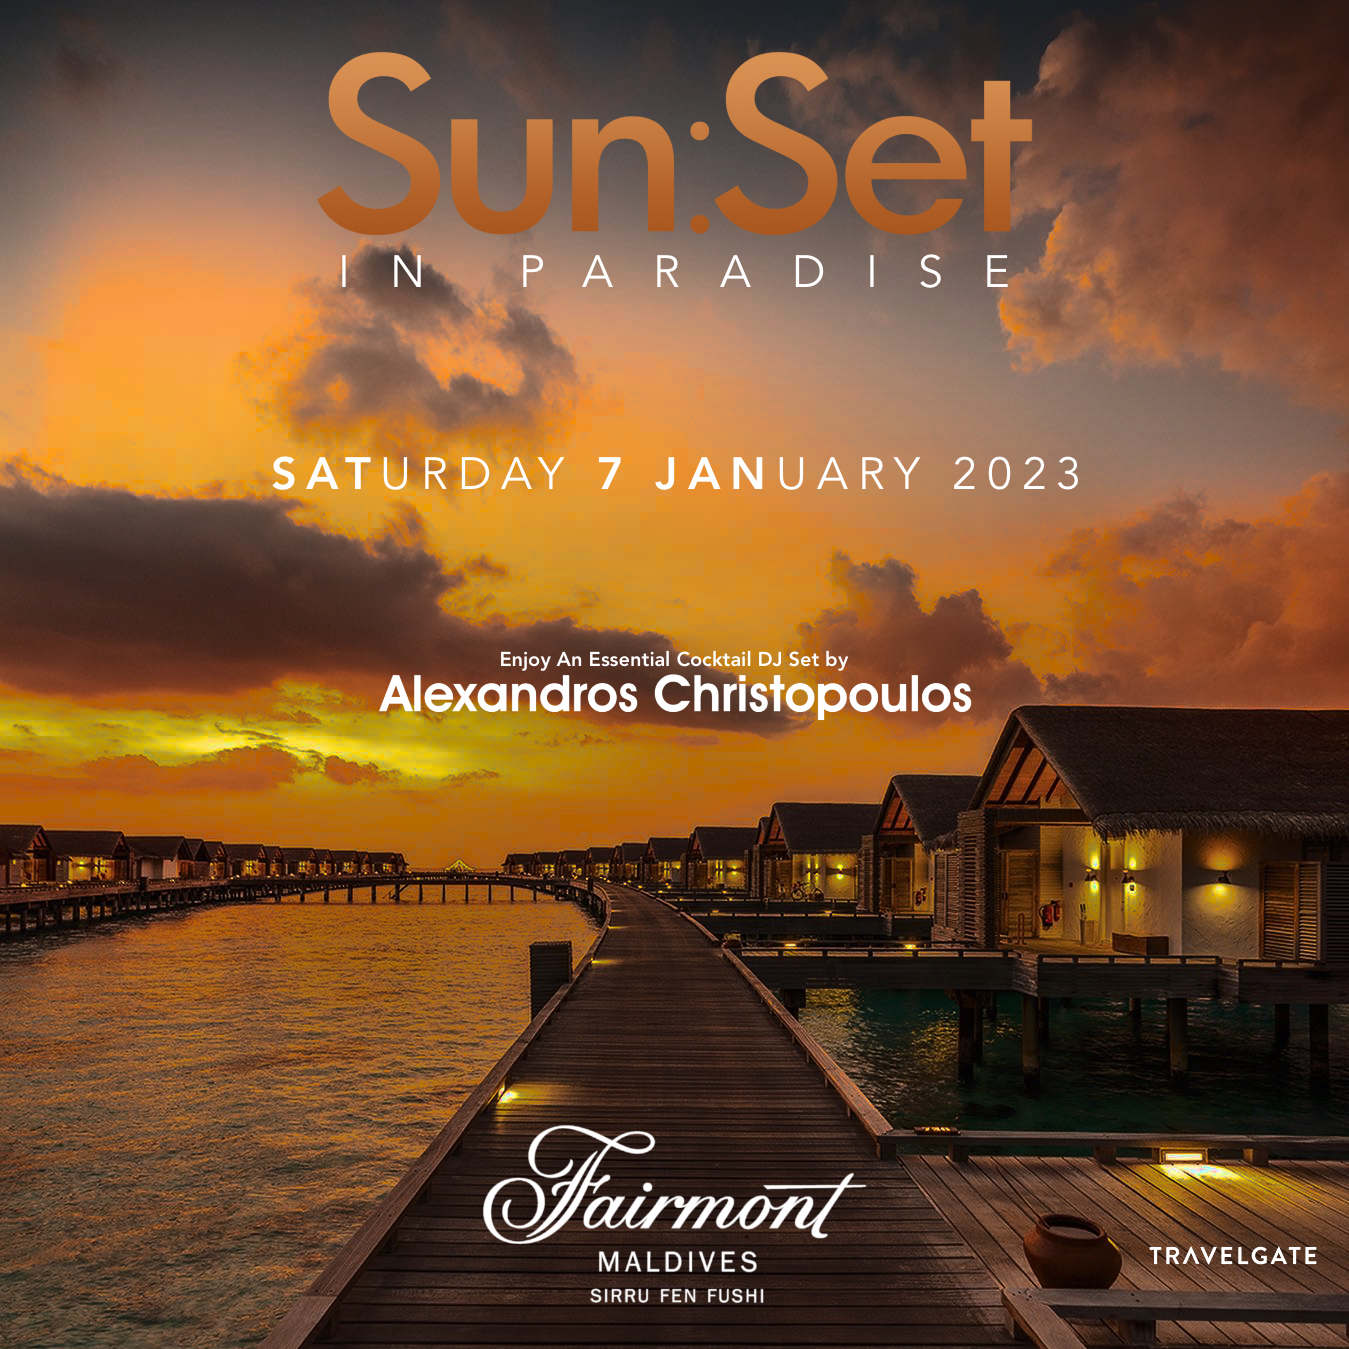 Sun:Set ® Fairmont (Maldives)